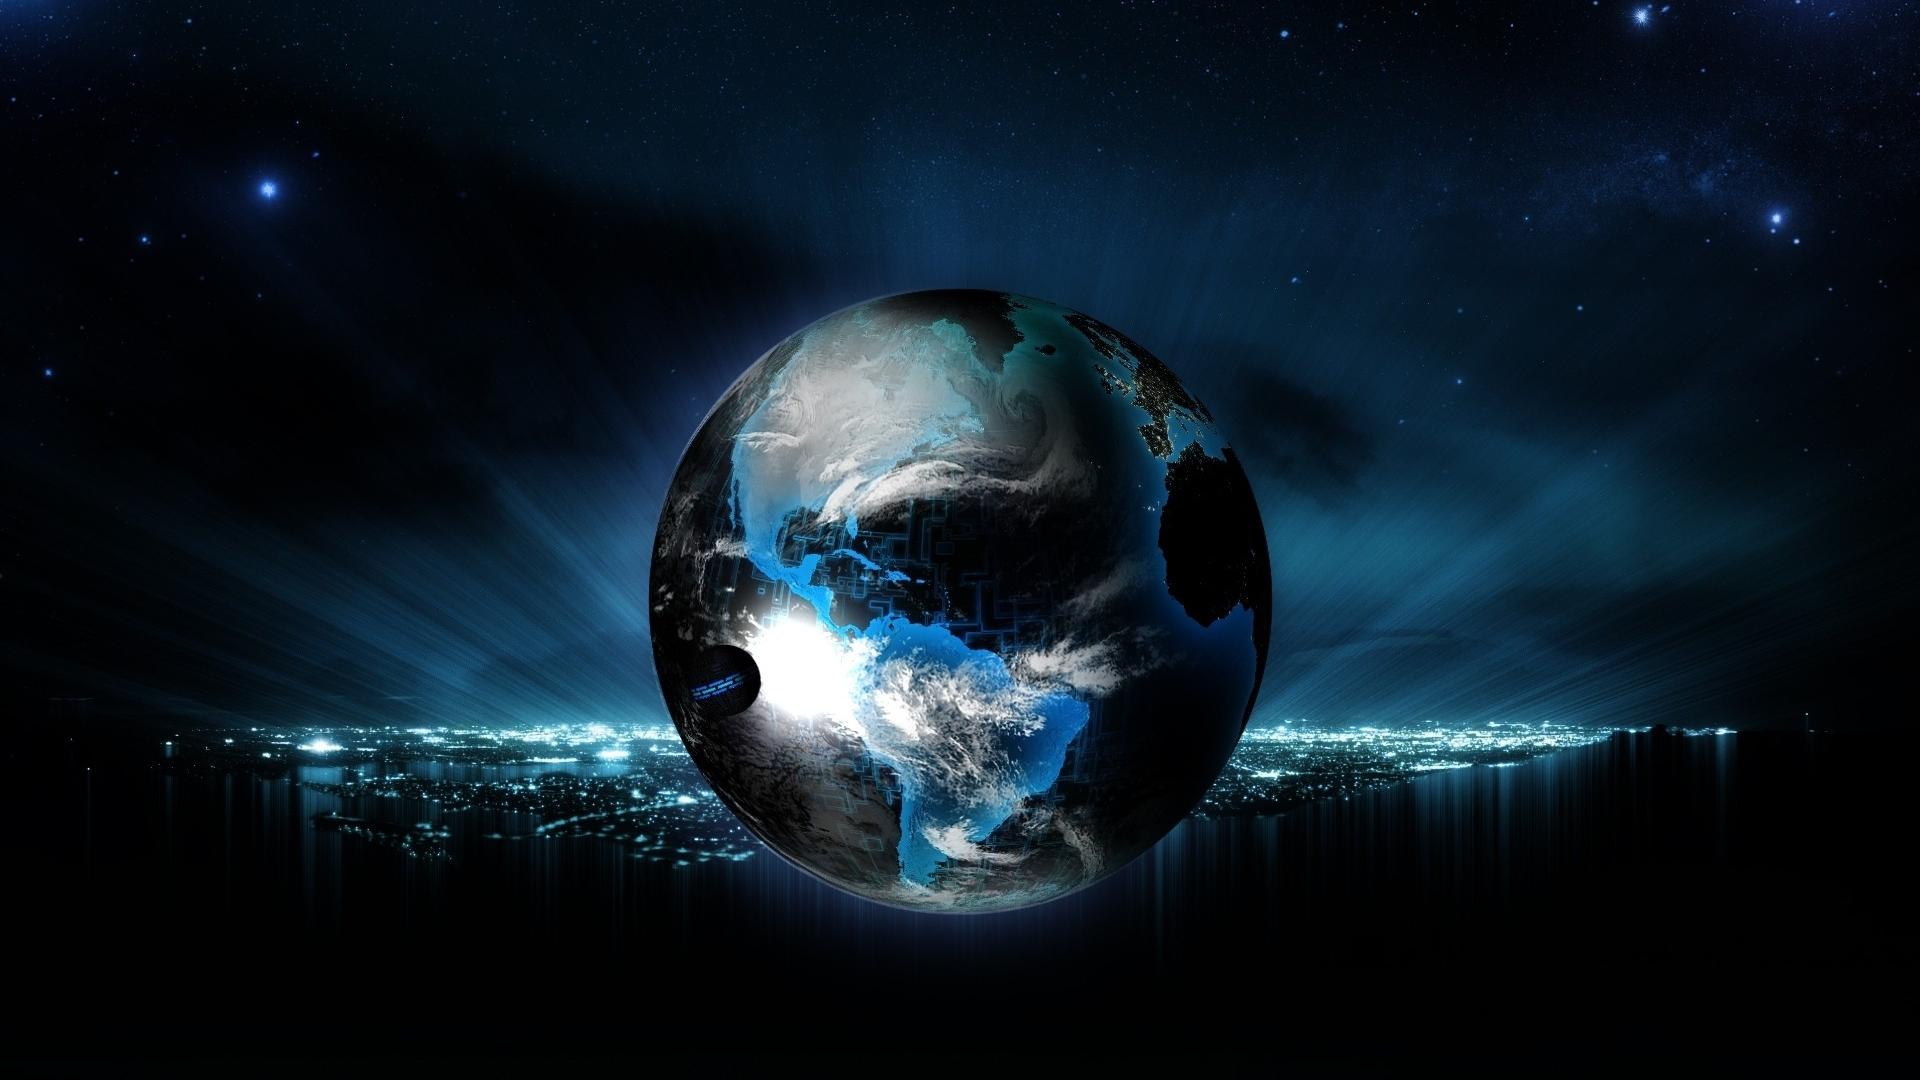 desktop earth from space hd free 4k background wallpaperss